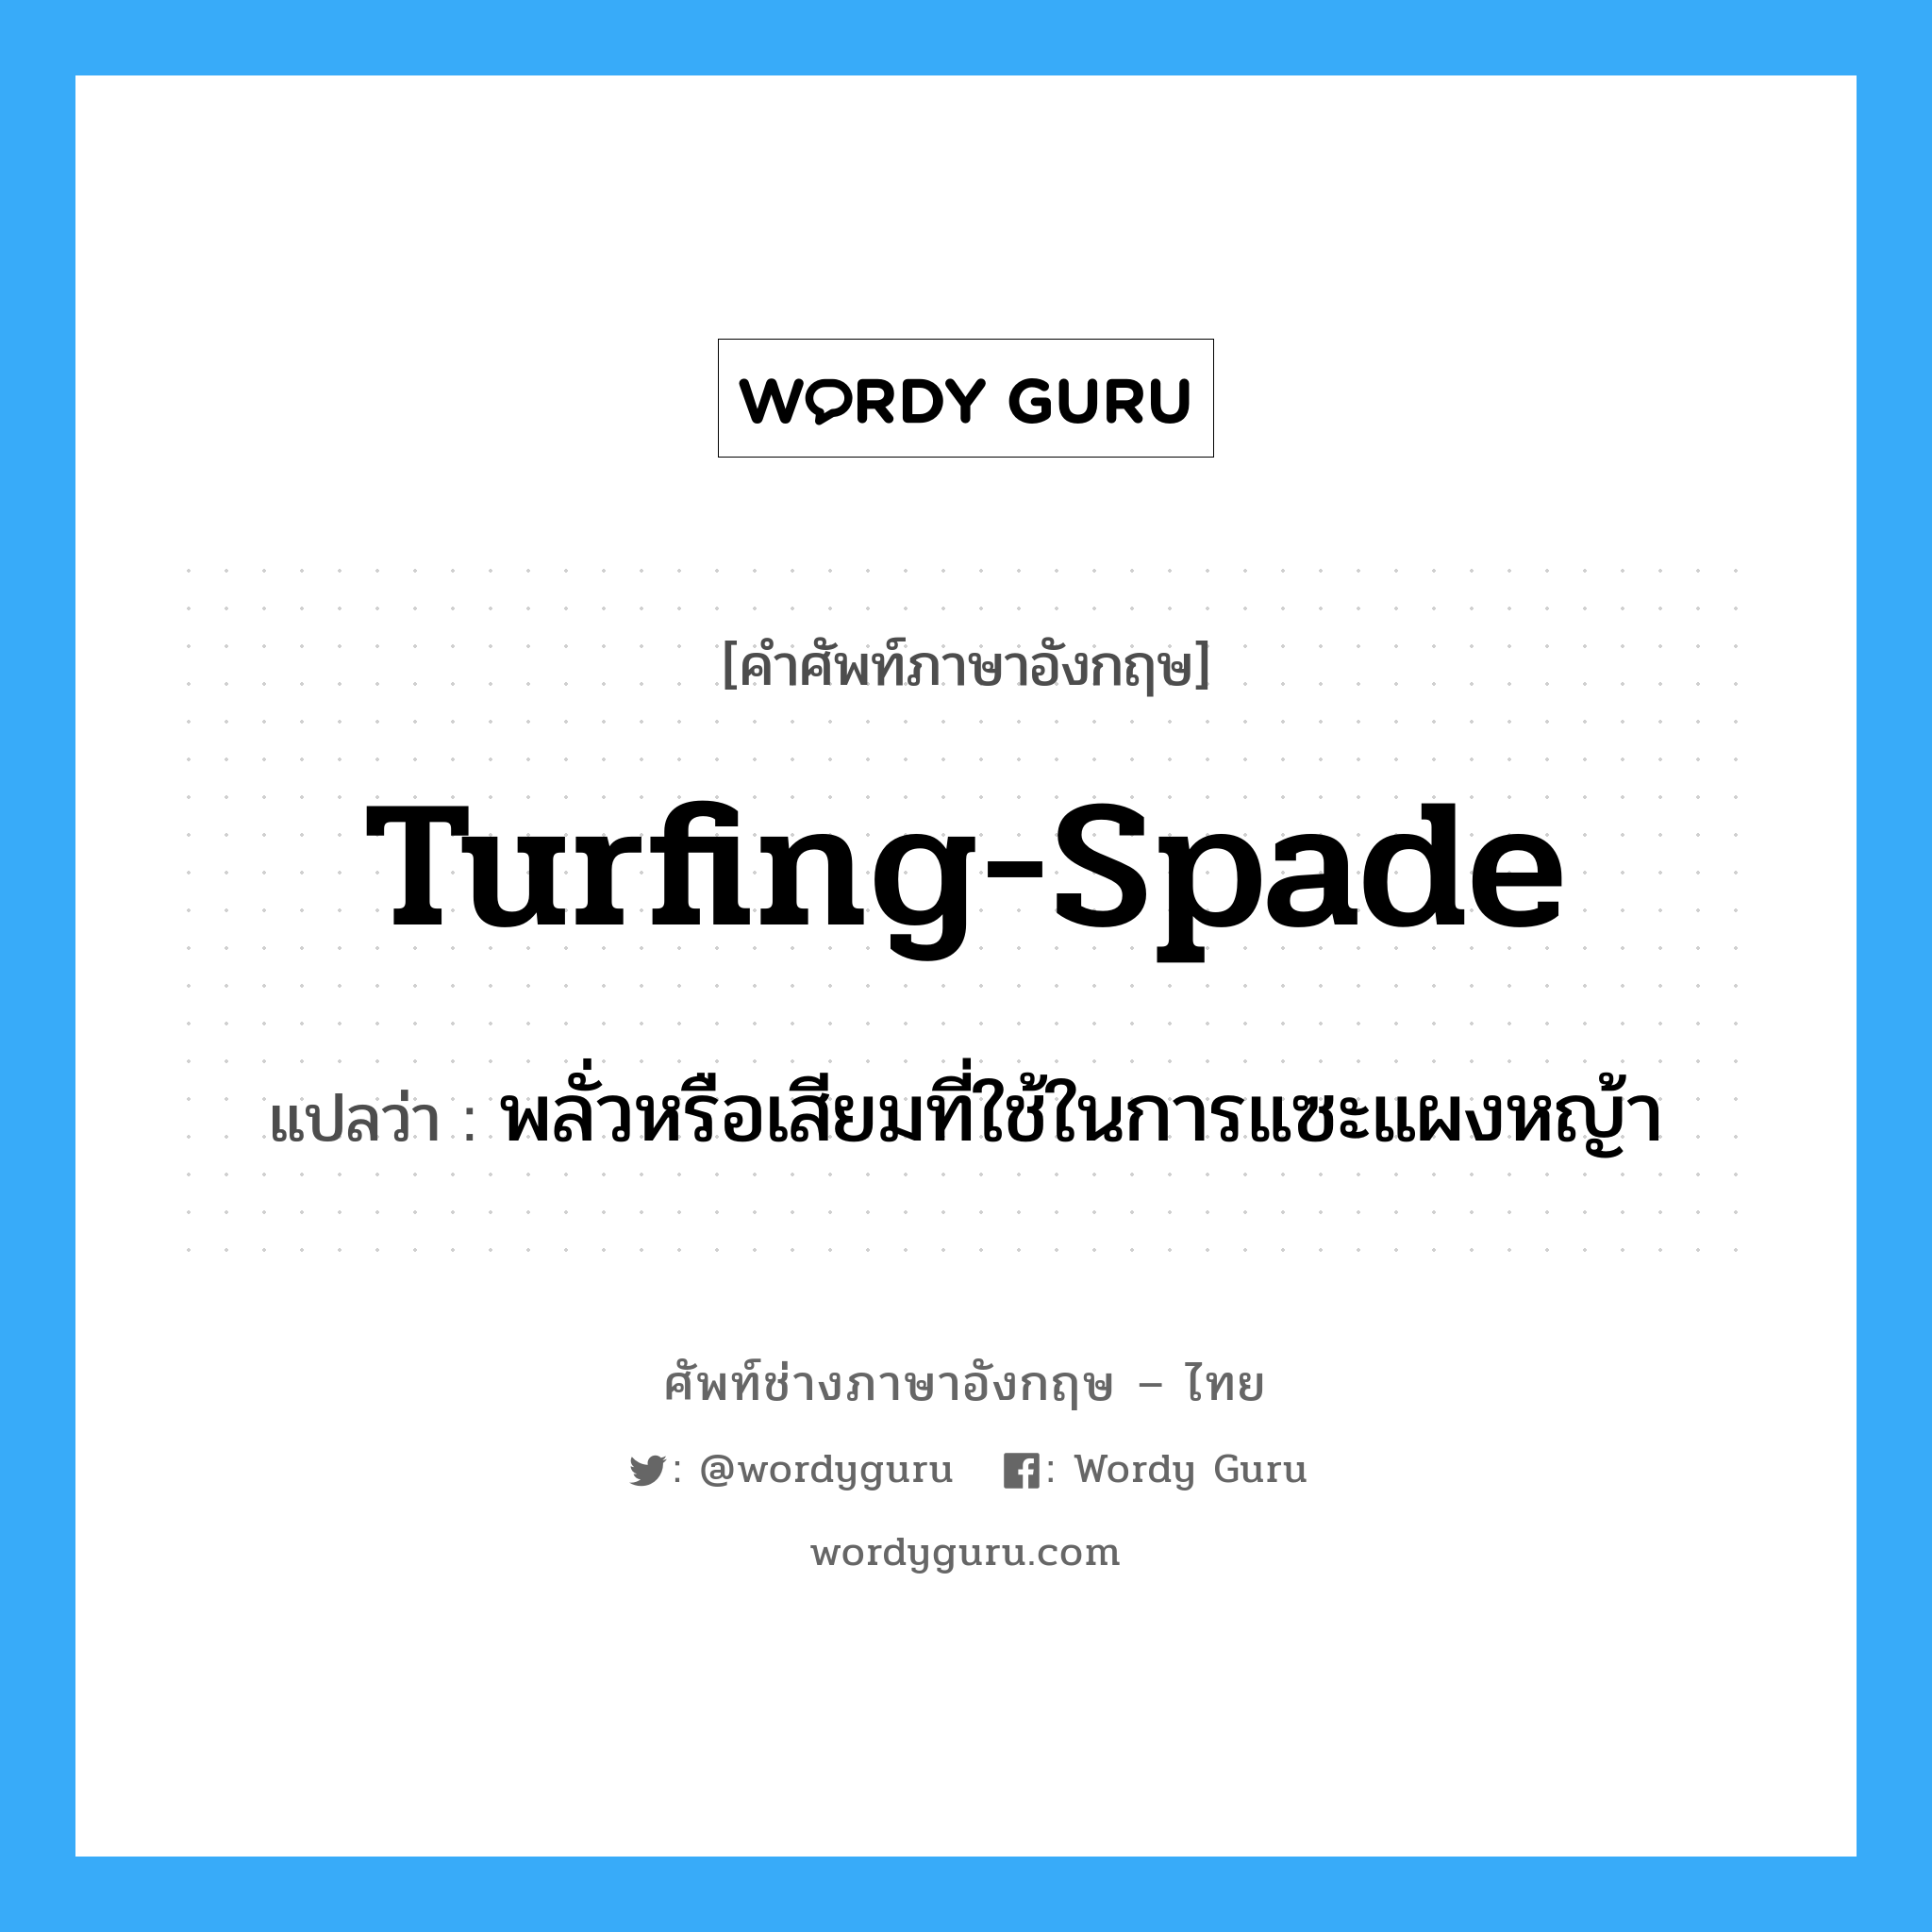 turfing-spade แปลว่า?, คำศัพท์ช่างภาษาอังกฤษ - ไทย turfing-spade คำศัพท์ภาษาอังกฤษ turfing-spade แปลว่า พลั่วหรือเสียมที่ใช้ในการแซะแผงหญ้า